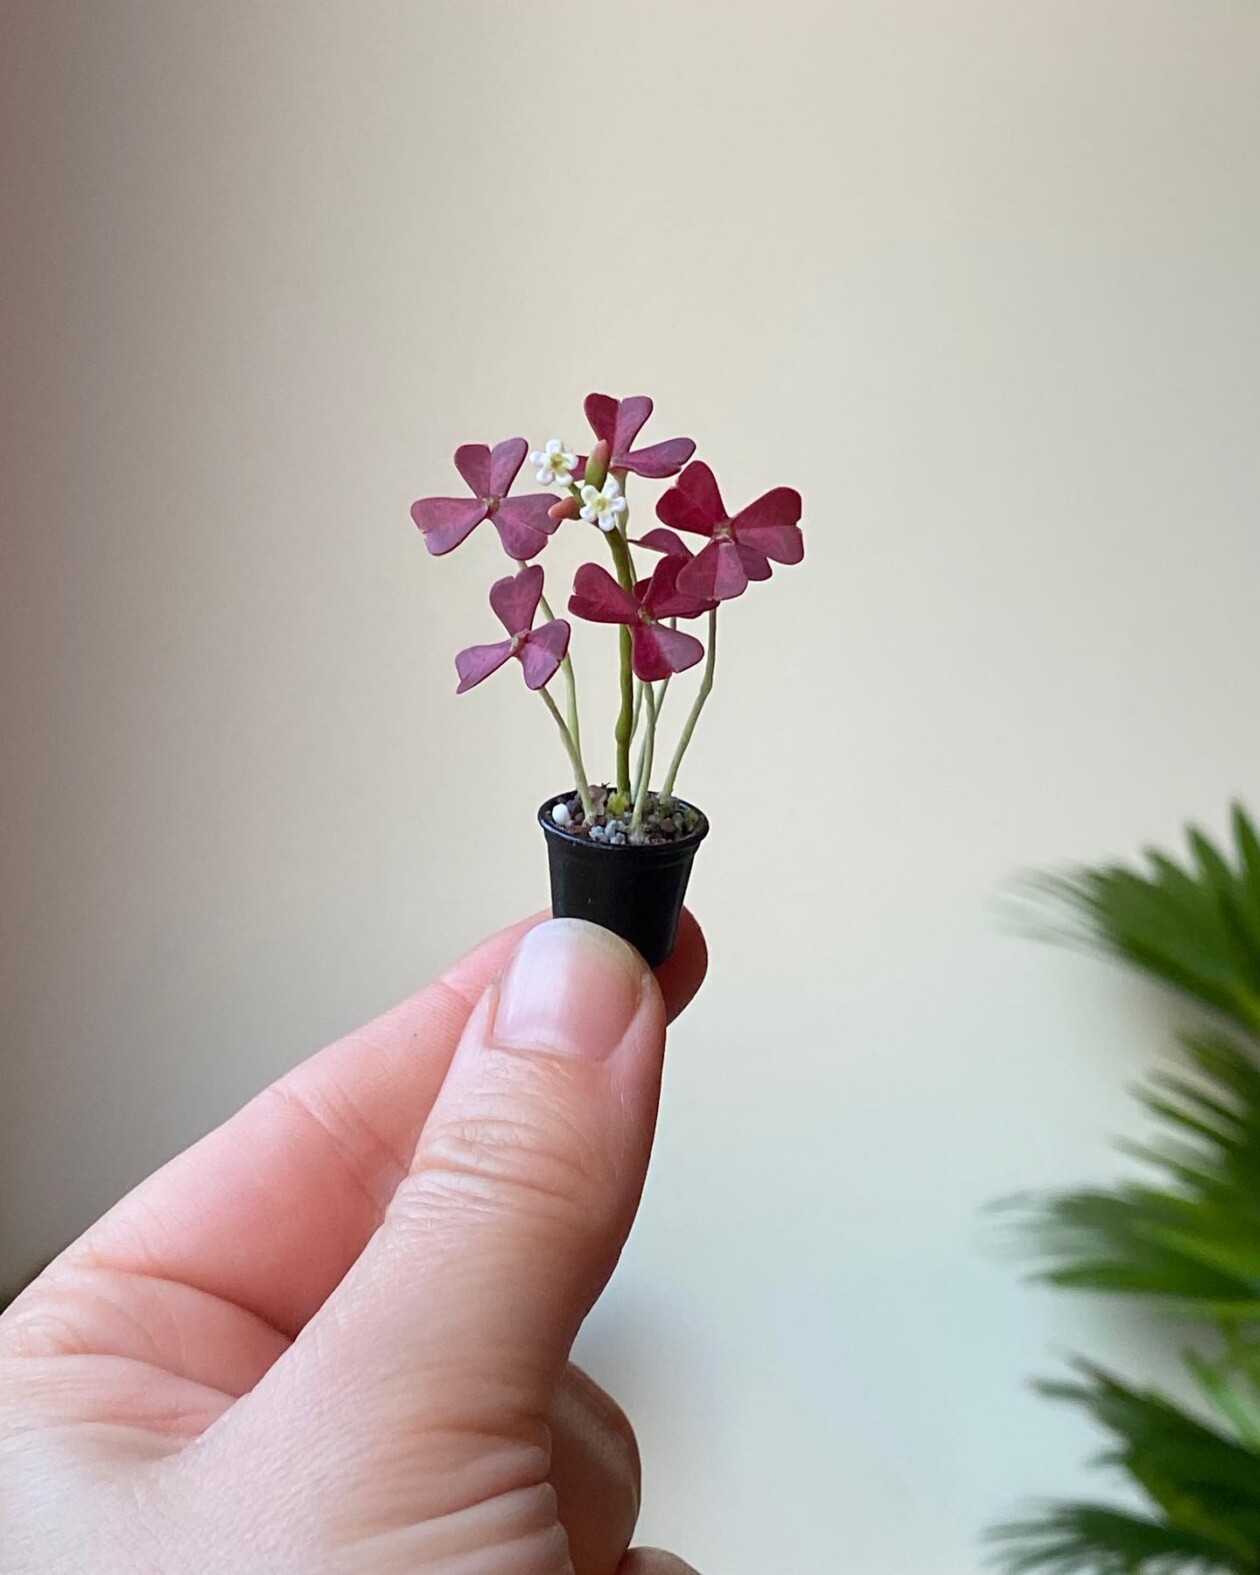 Handmade Miniature Polymer Clay Plants By Astrid Wilk (1)